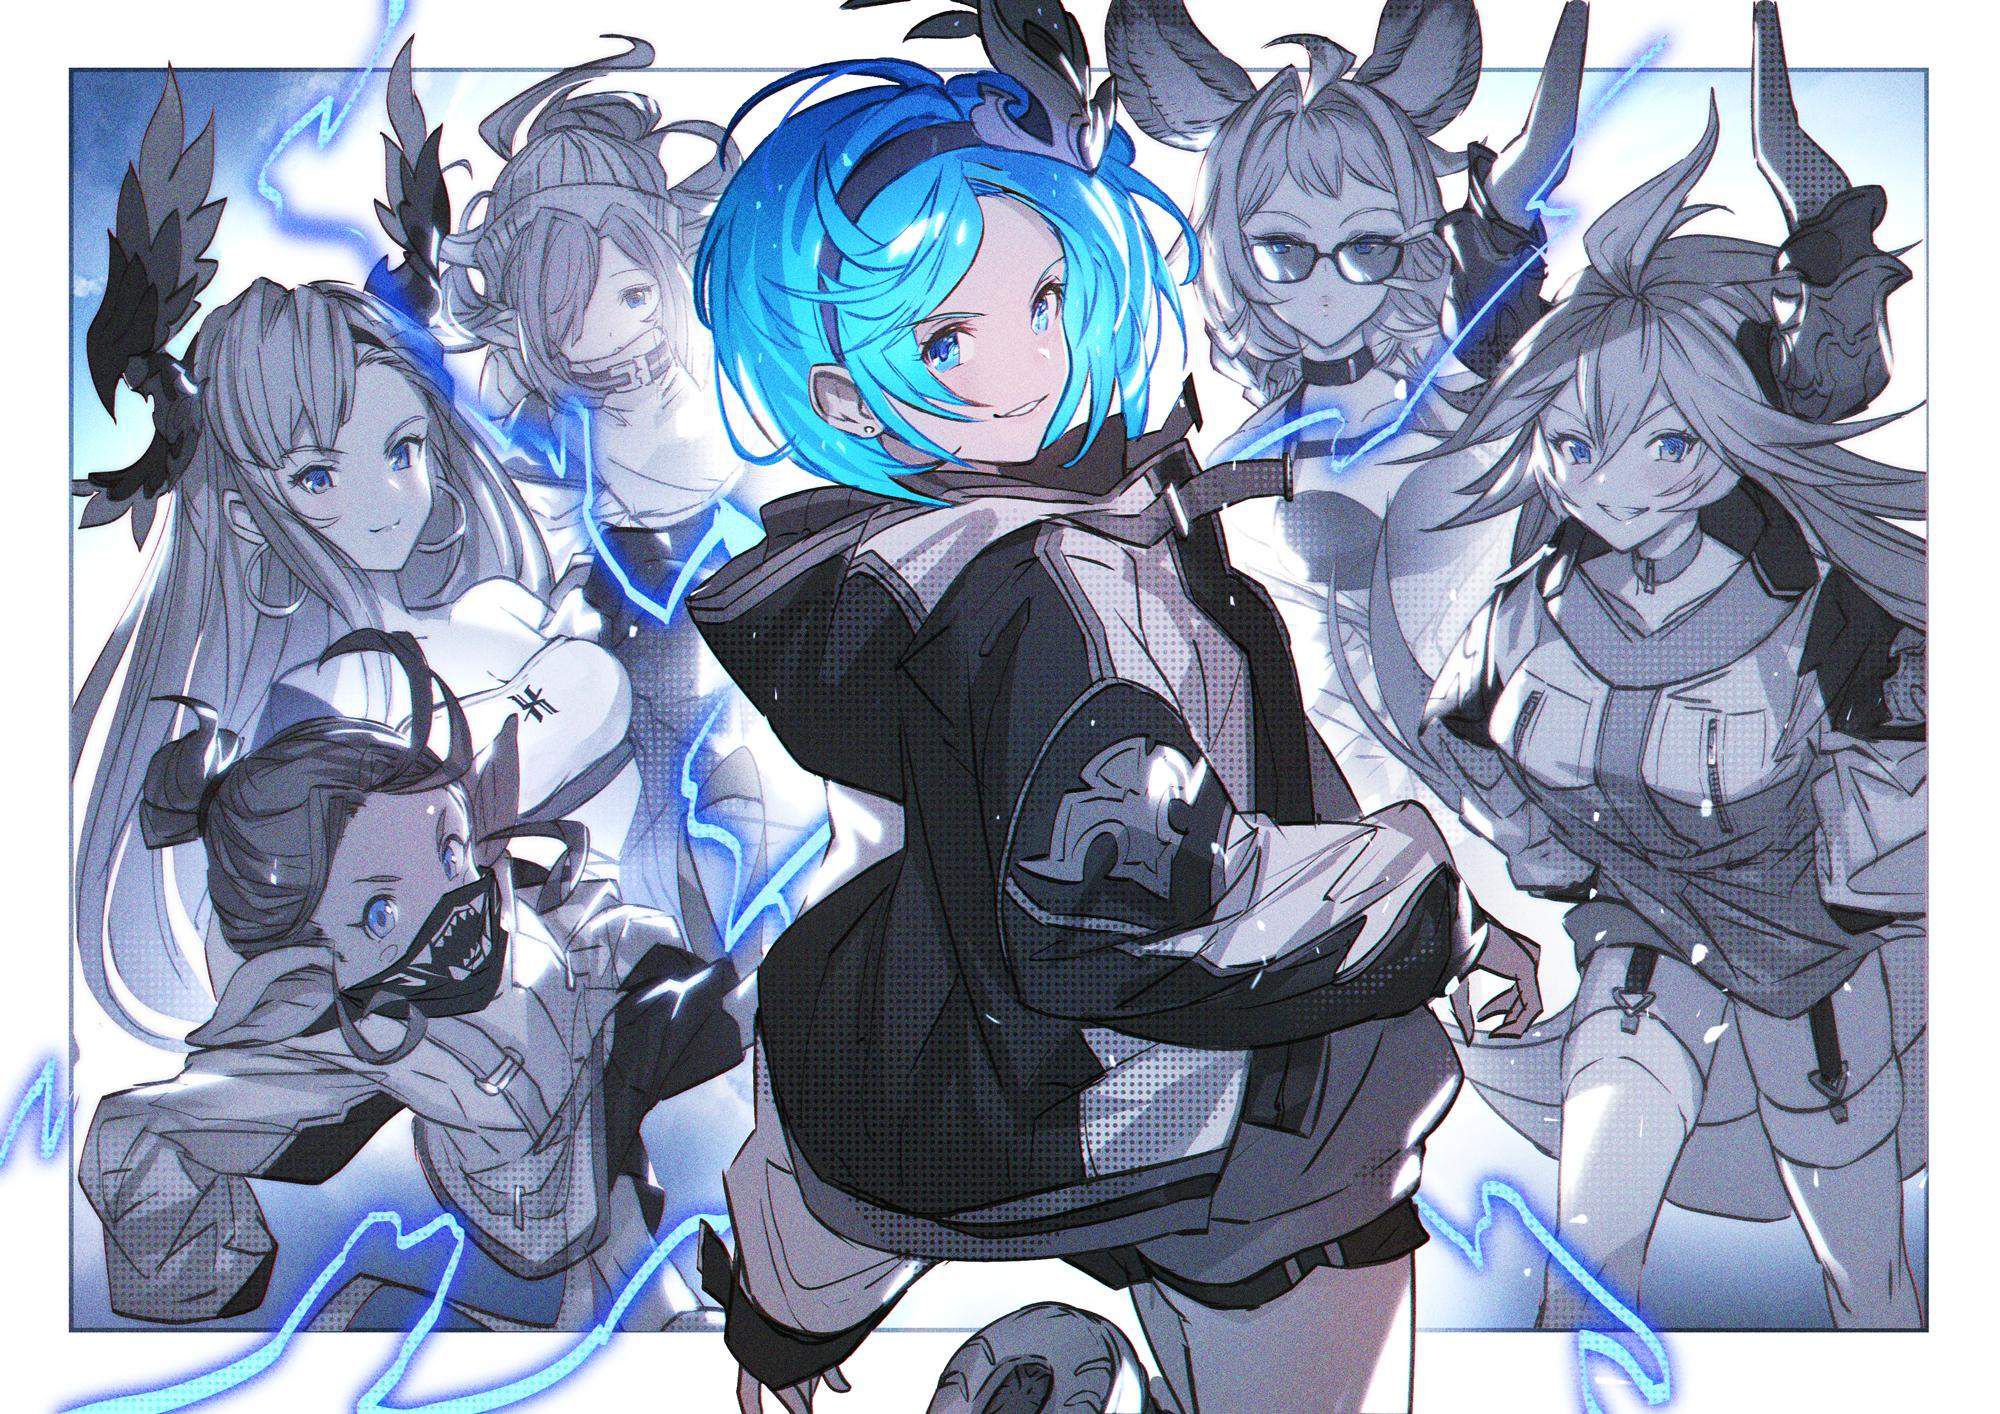 [Grand Blue Fantasy] I want to make it in Gita and nukinuke 4